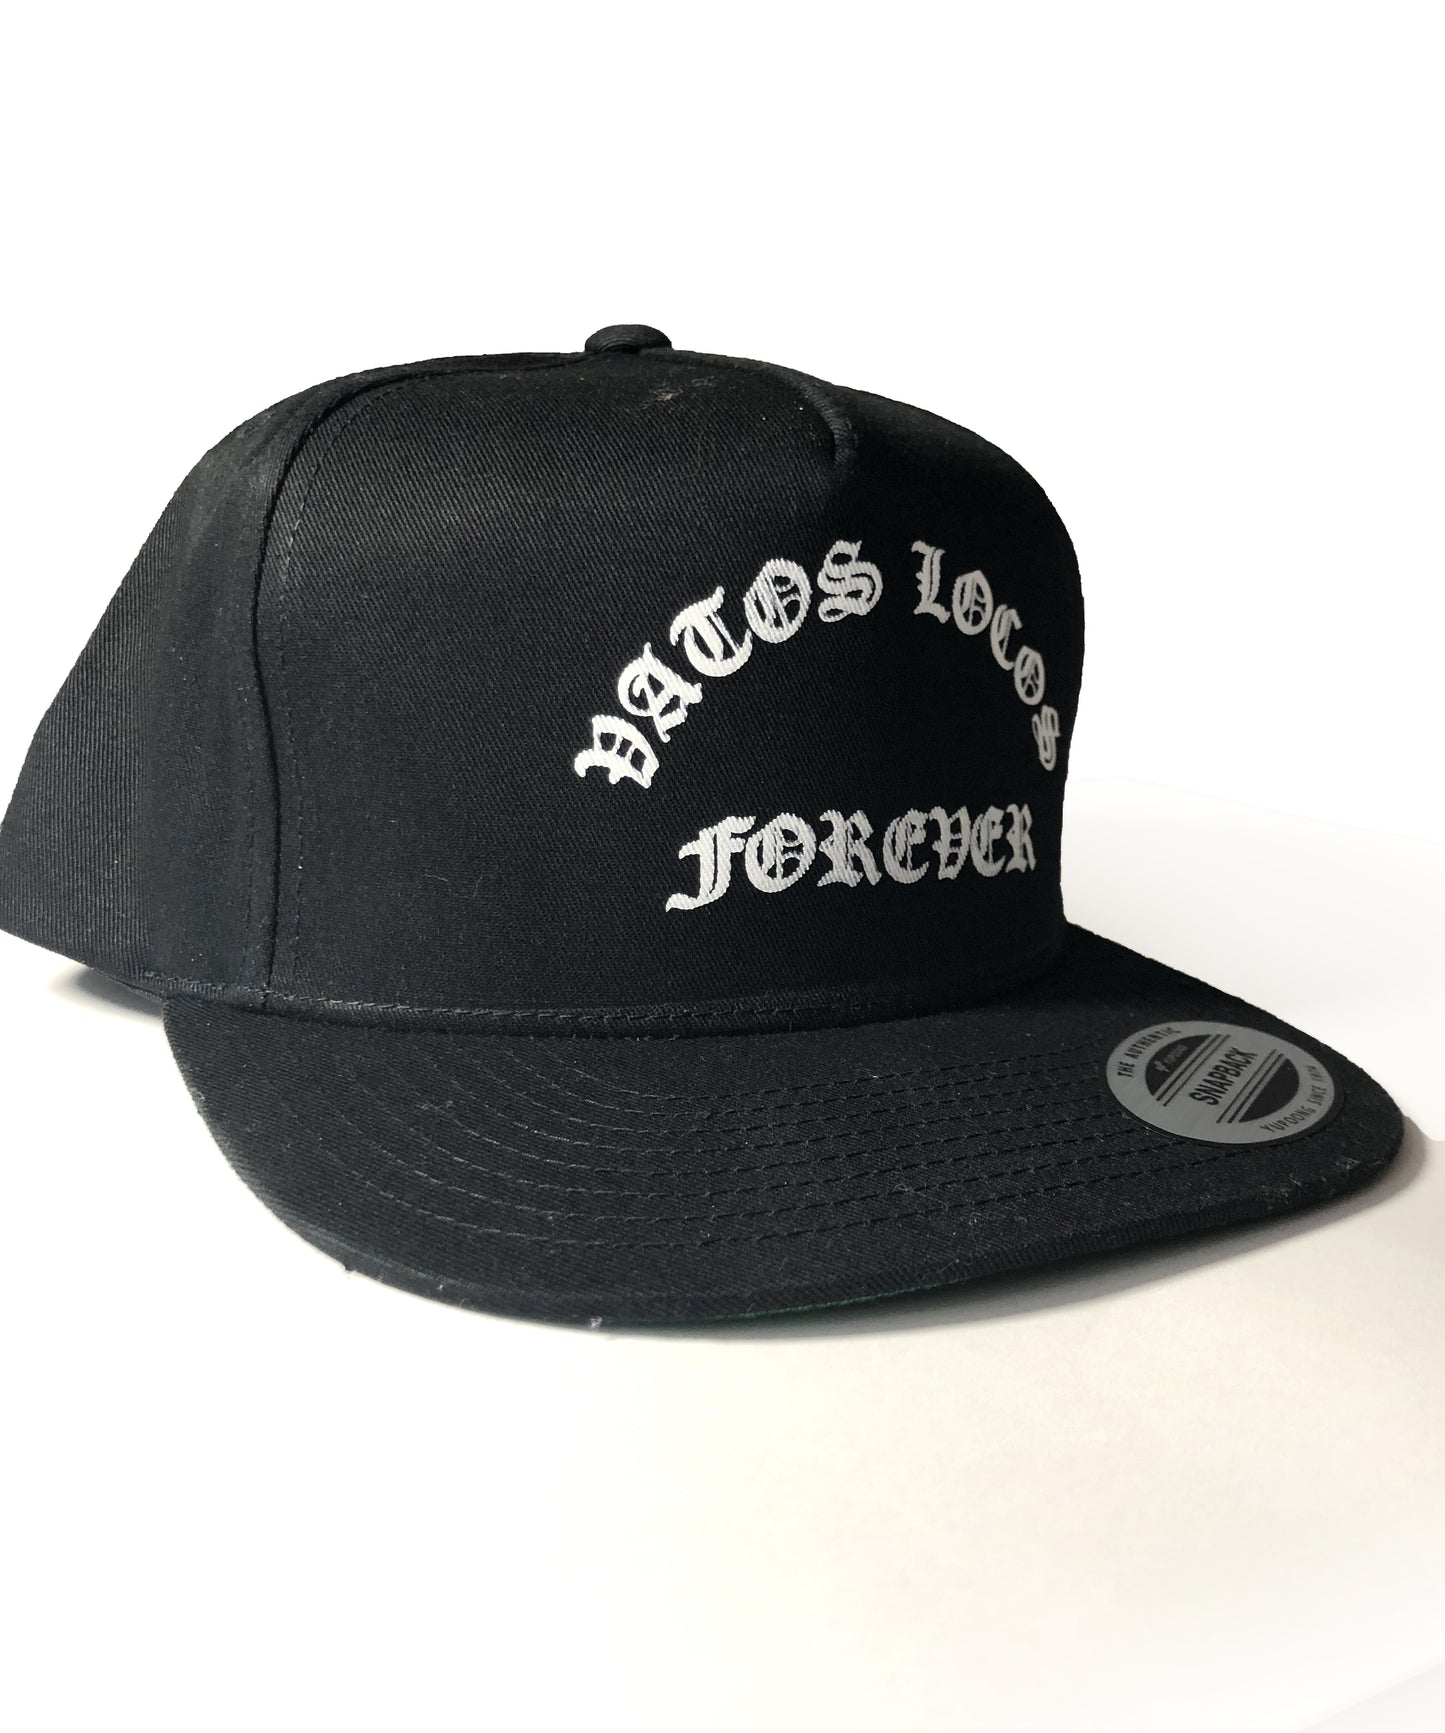 Vatos Locos Forever snapback hat